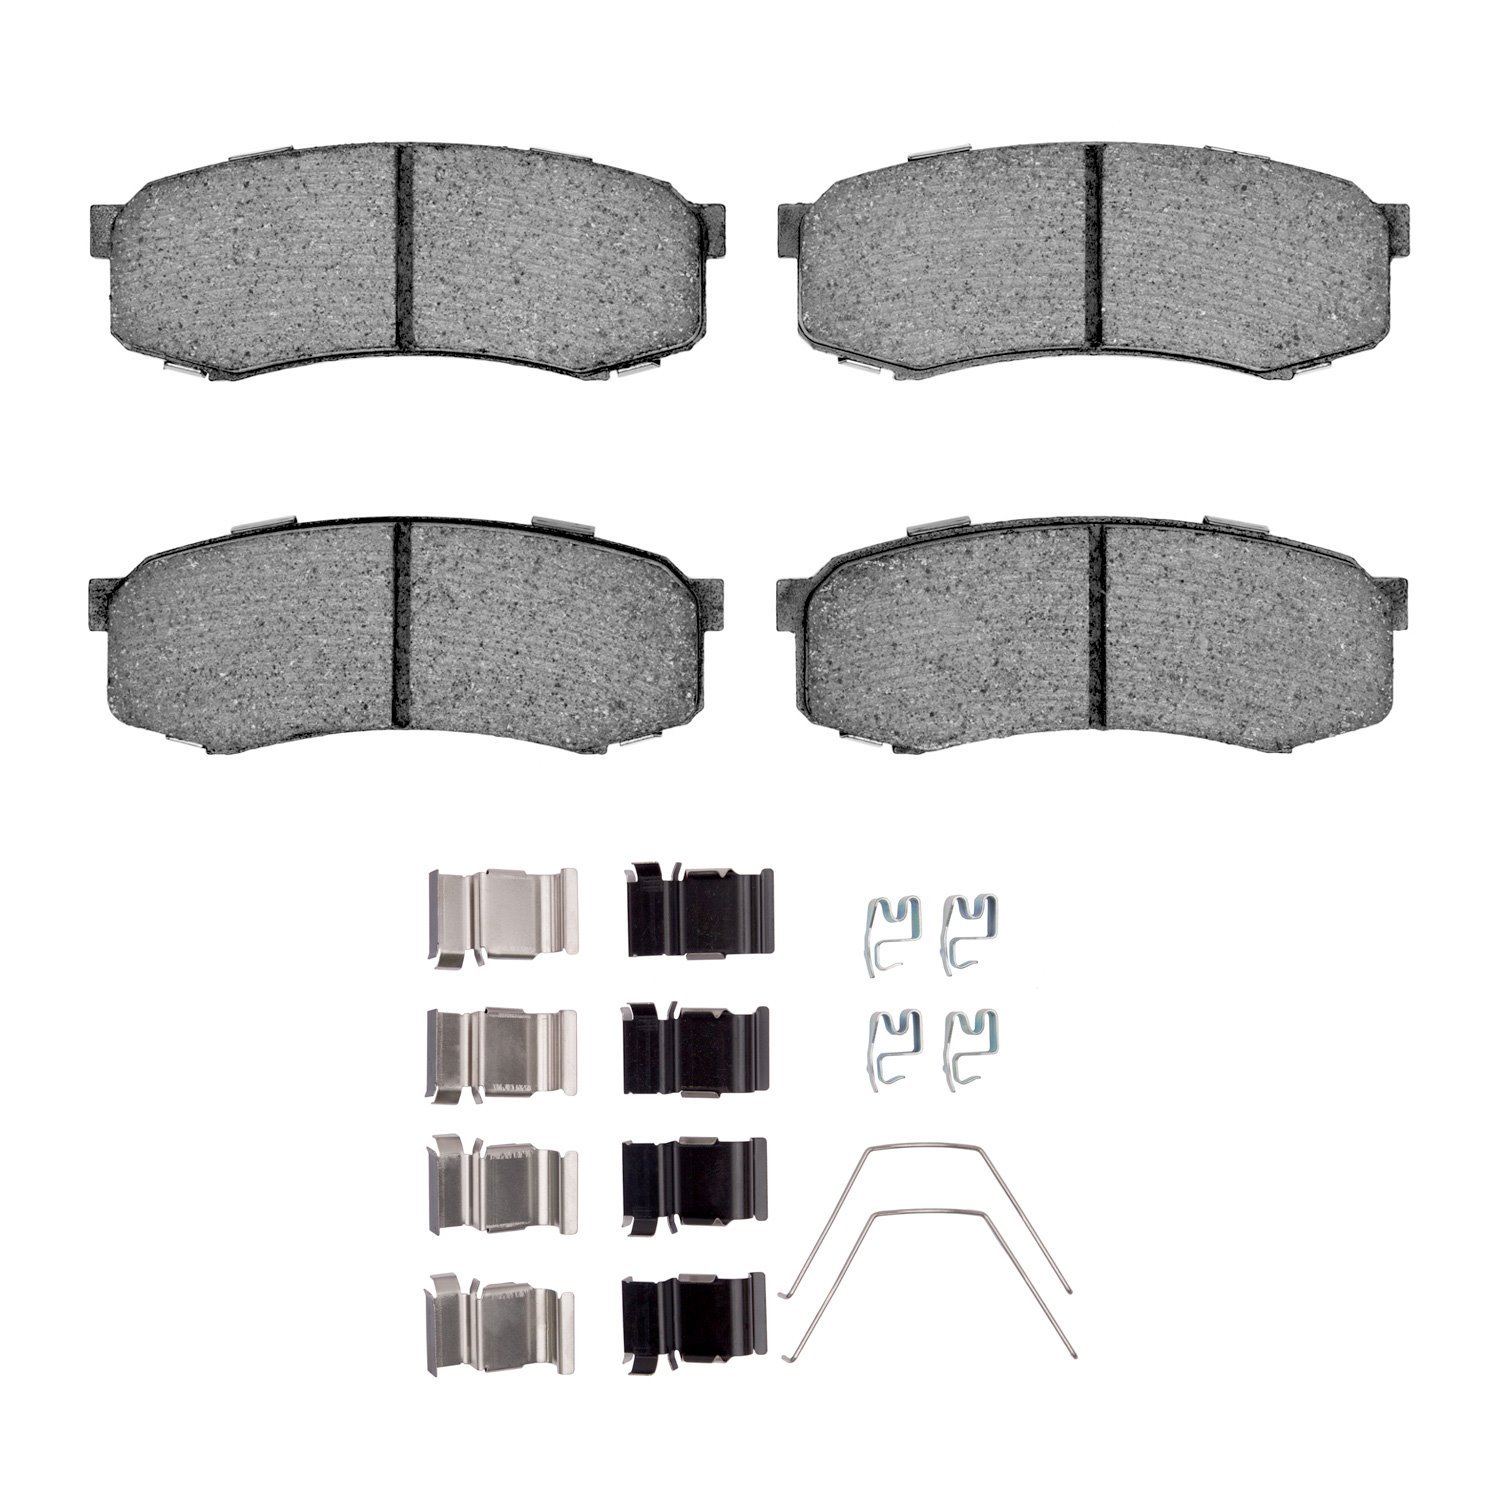 1400-0606-01 Ultimate-Duty Brake Pads & Hardware Kit, Fits Select Multiple Makes/Models, Position: Rear